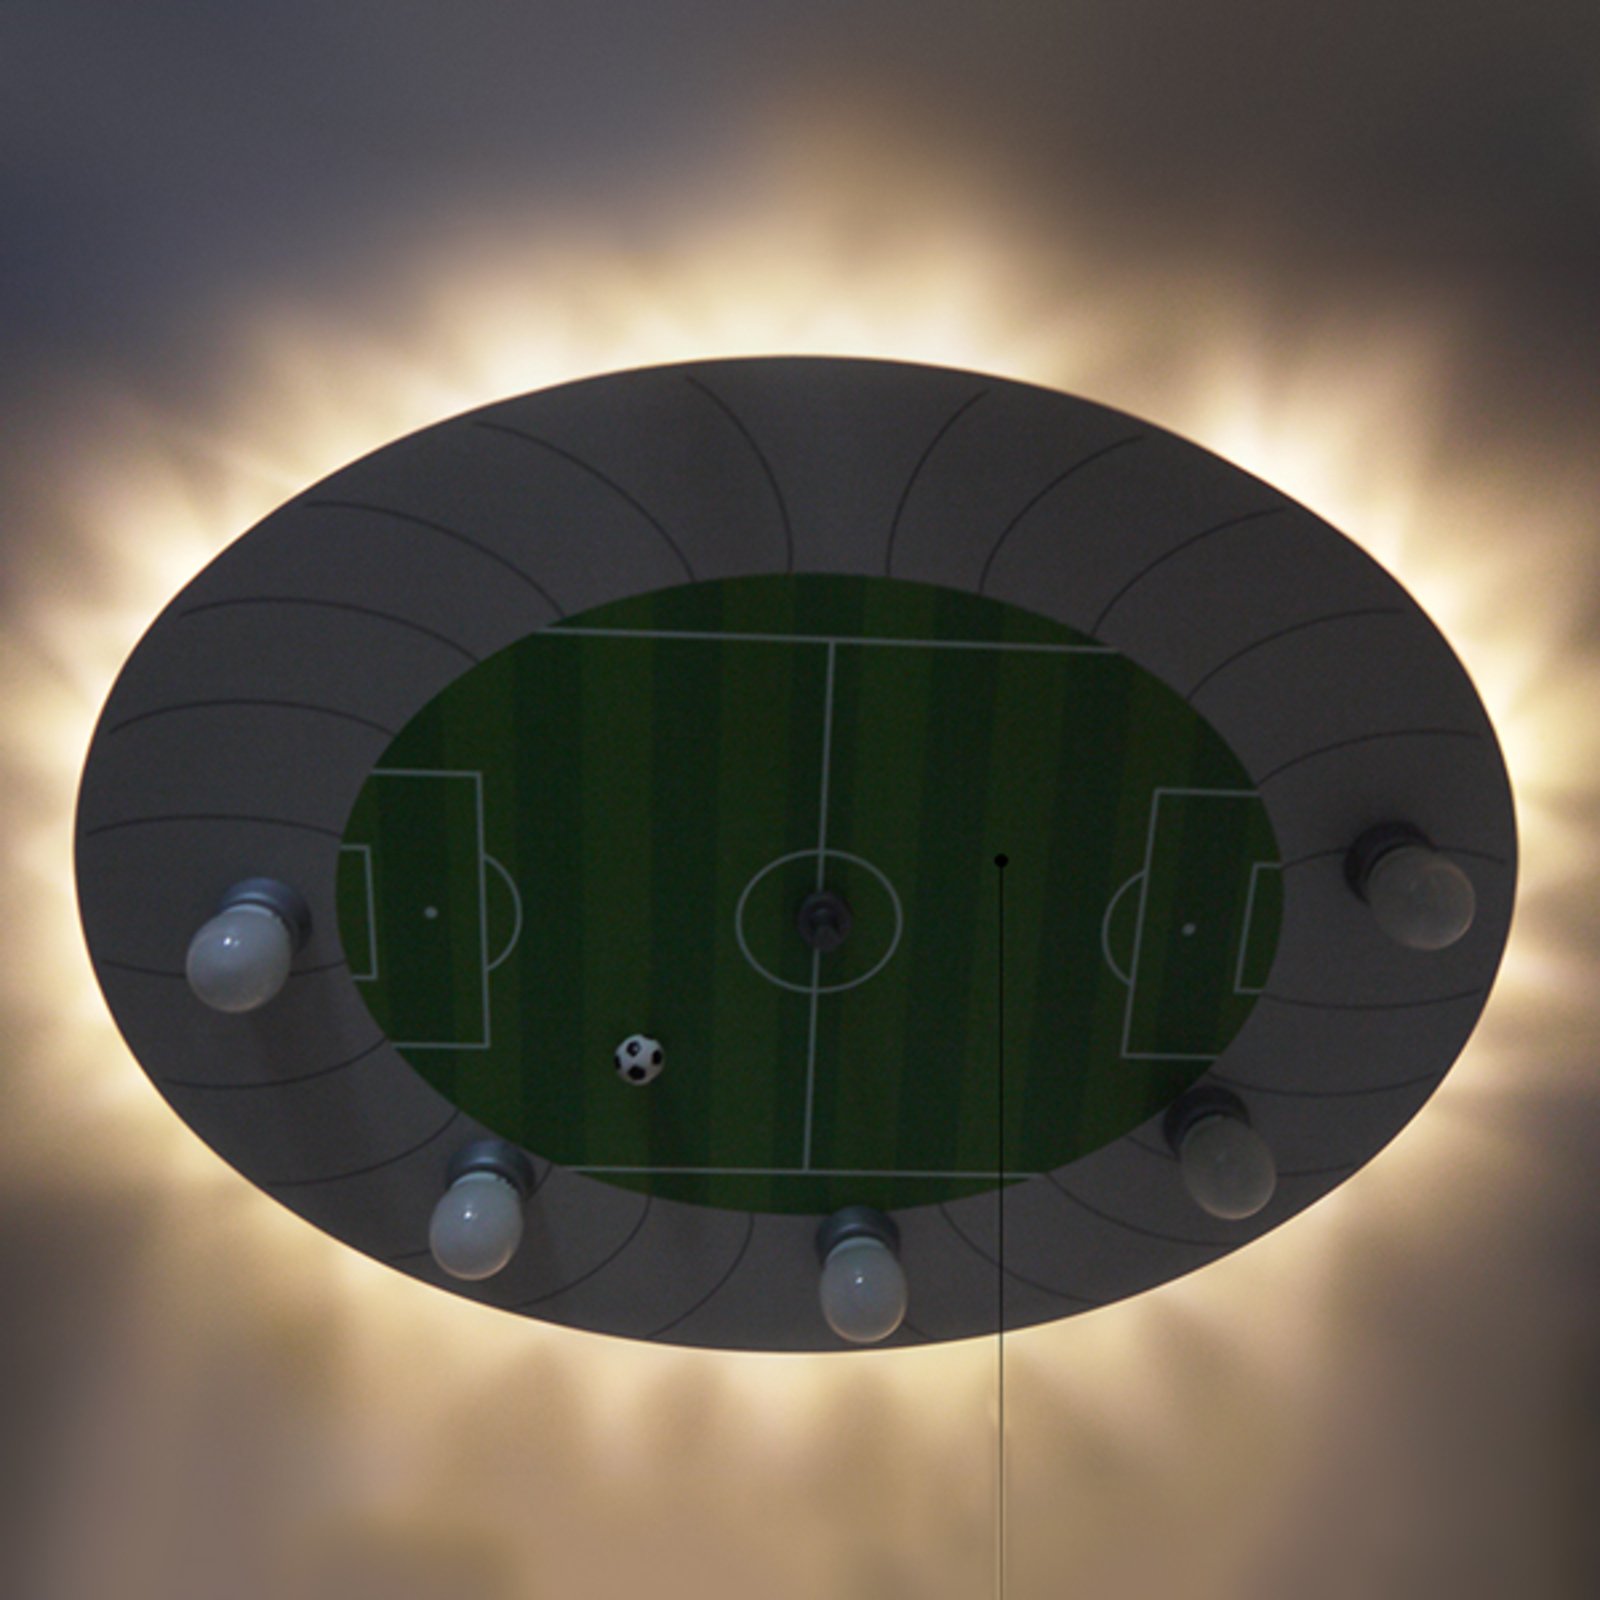 Football Stadium ceiling light with LED lights